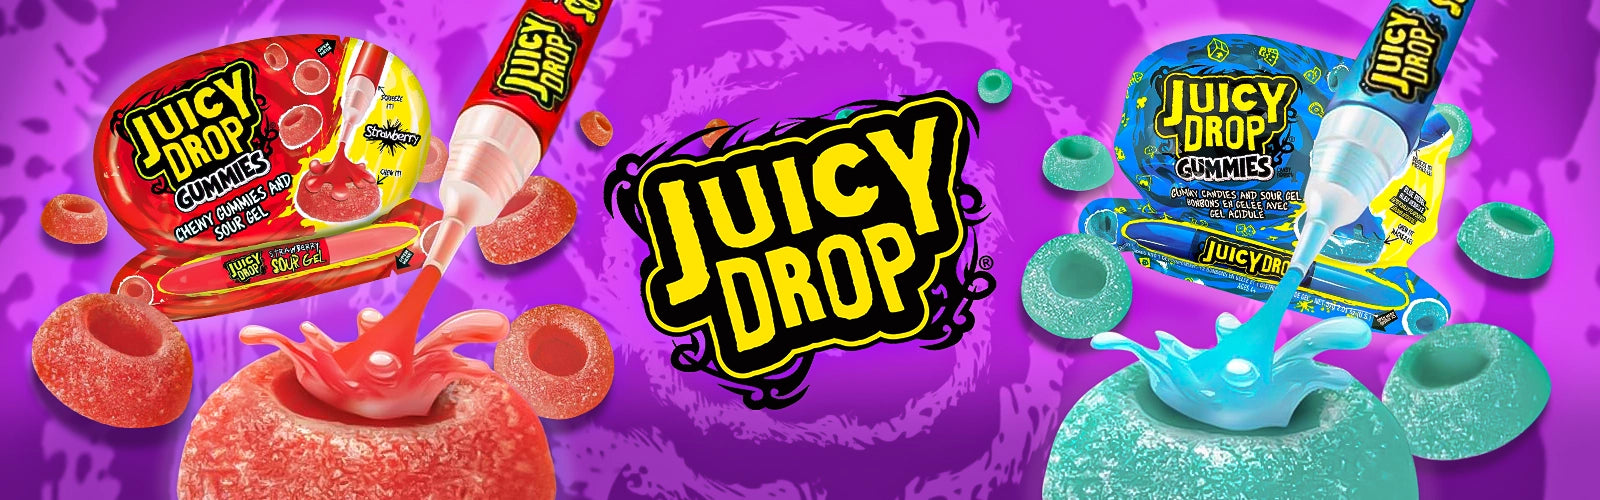 Juicy Drops banner